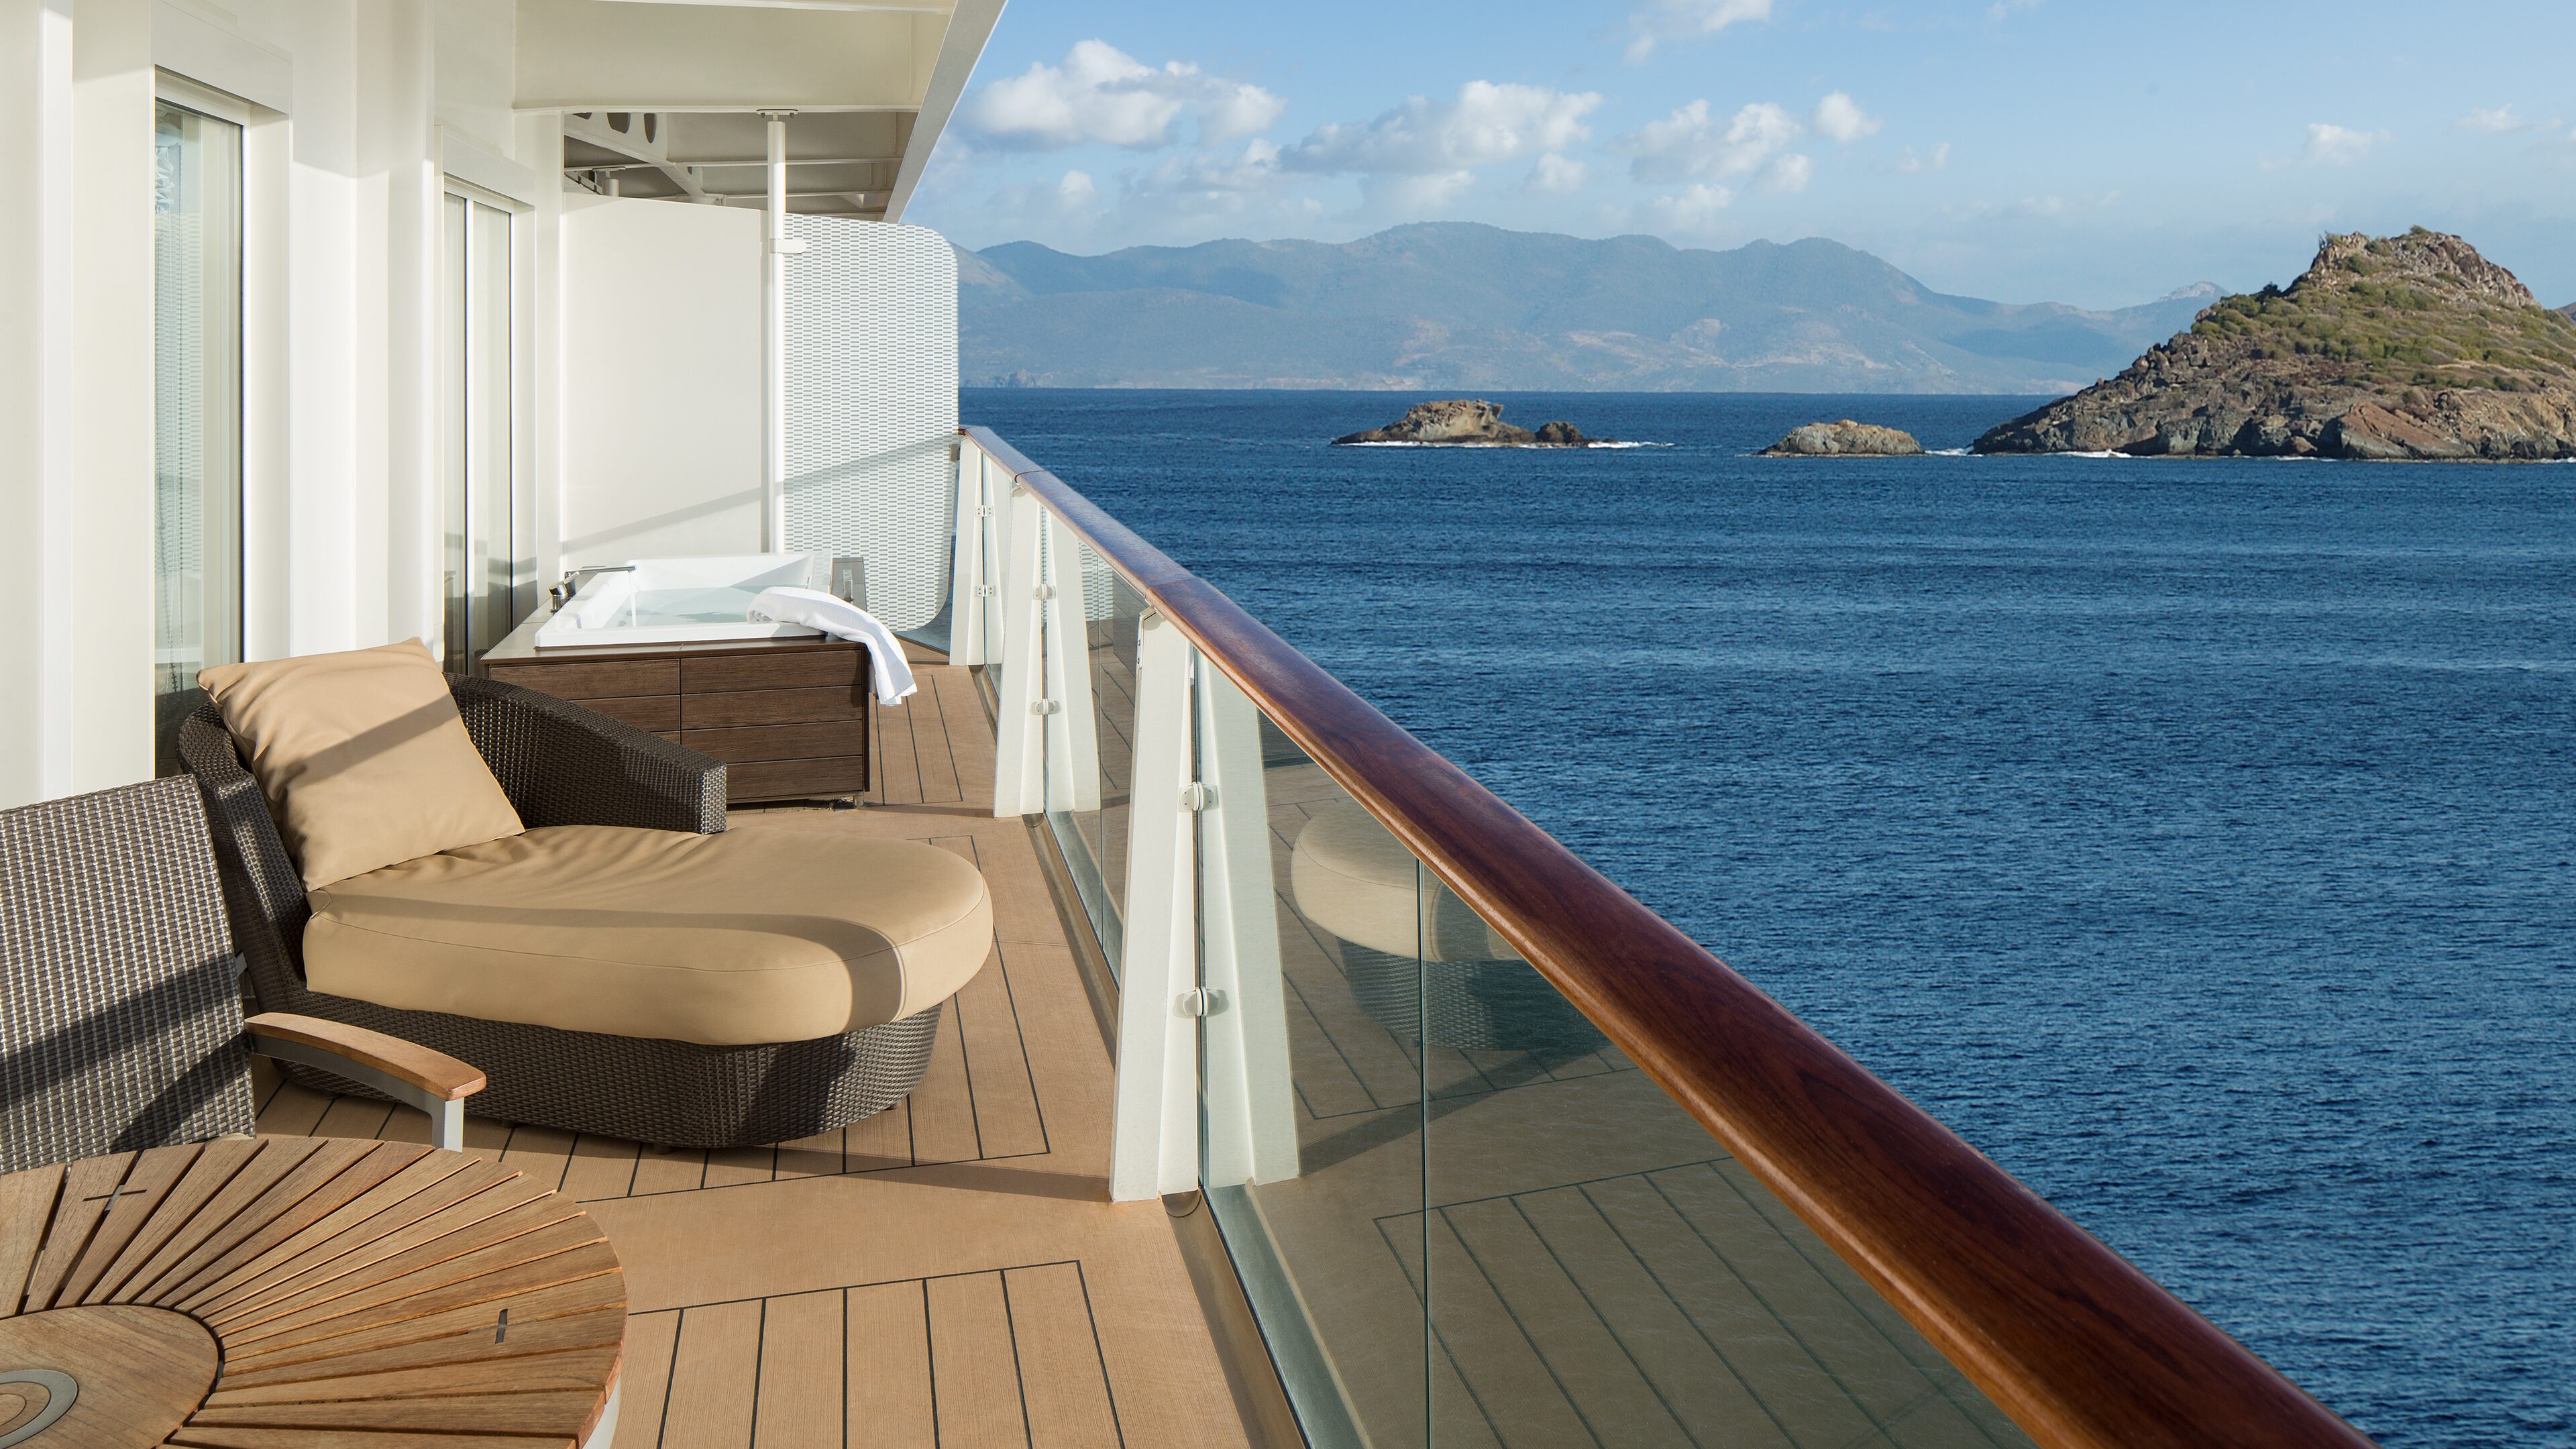 celebrity cruises suite amenities